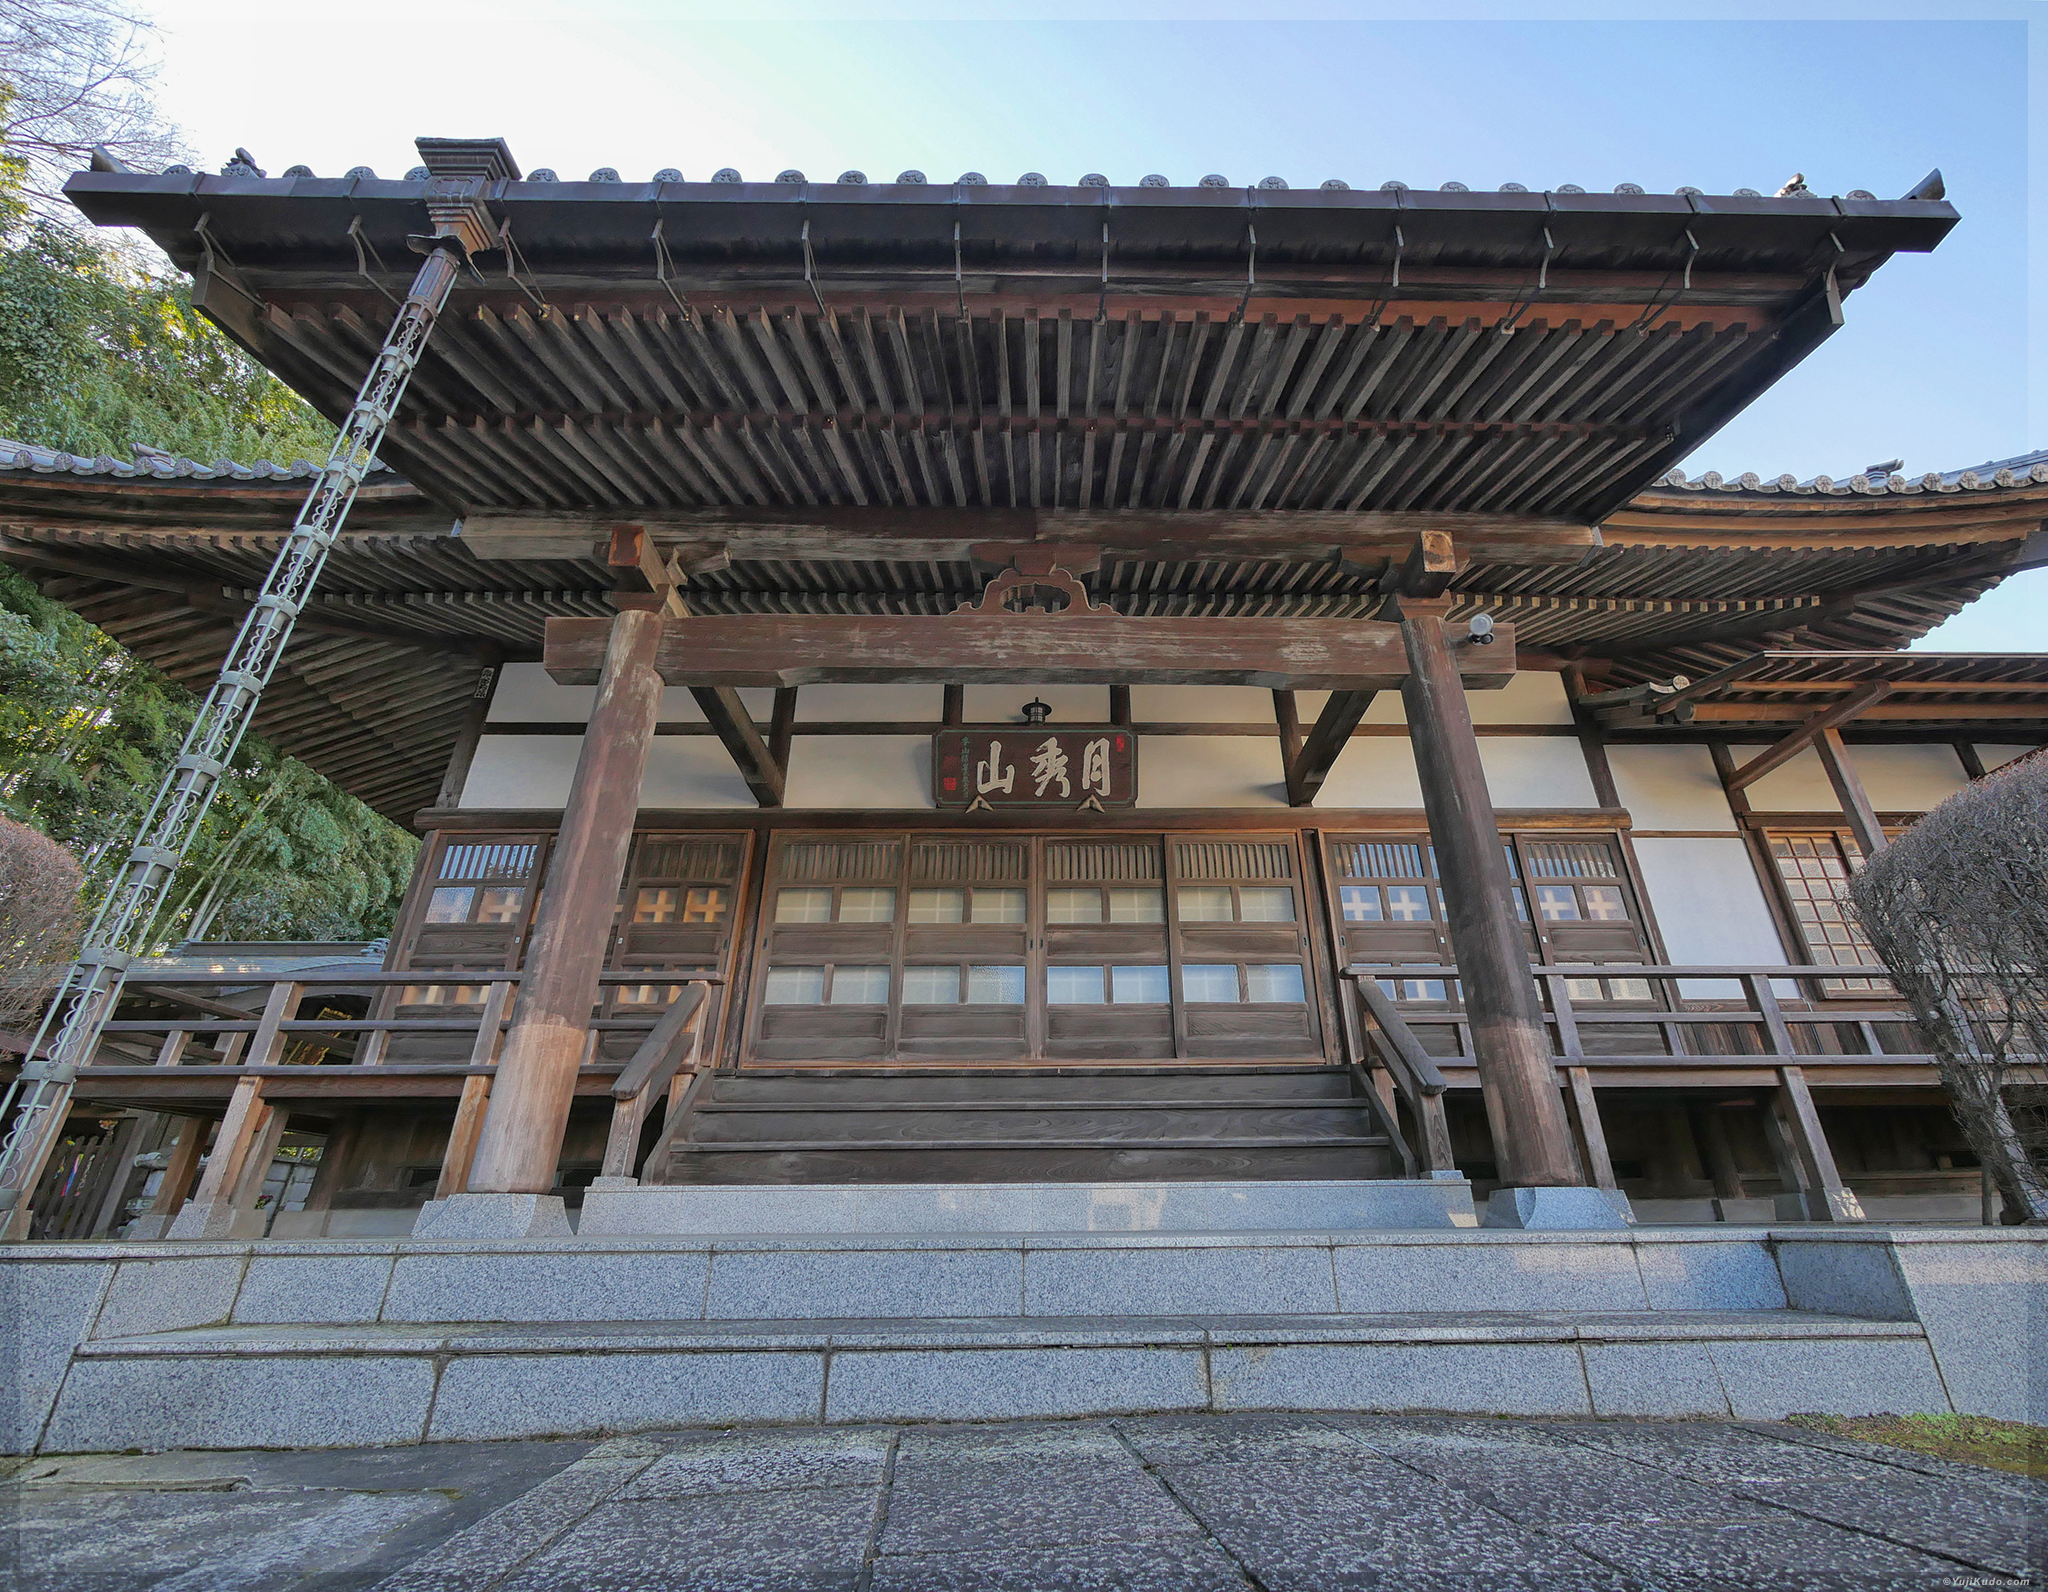 Kousenji Temple – Kichijoji